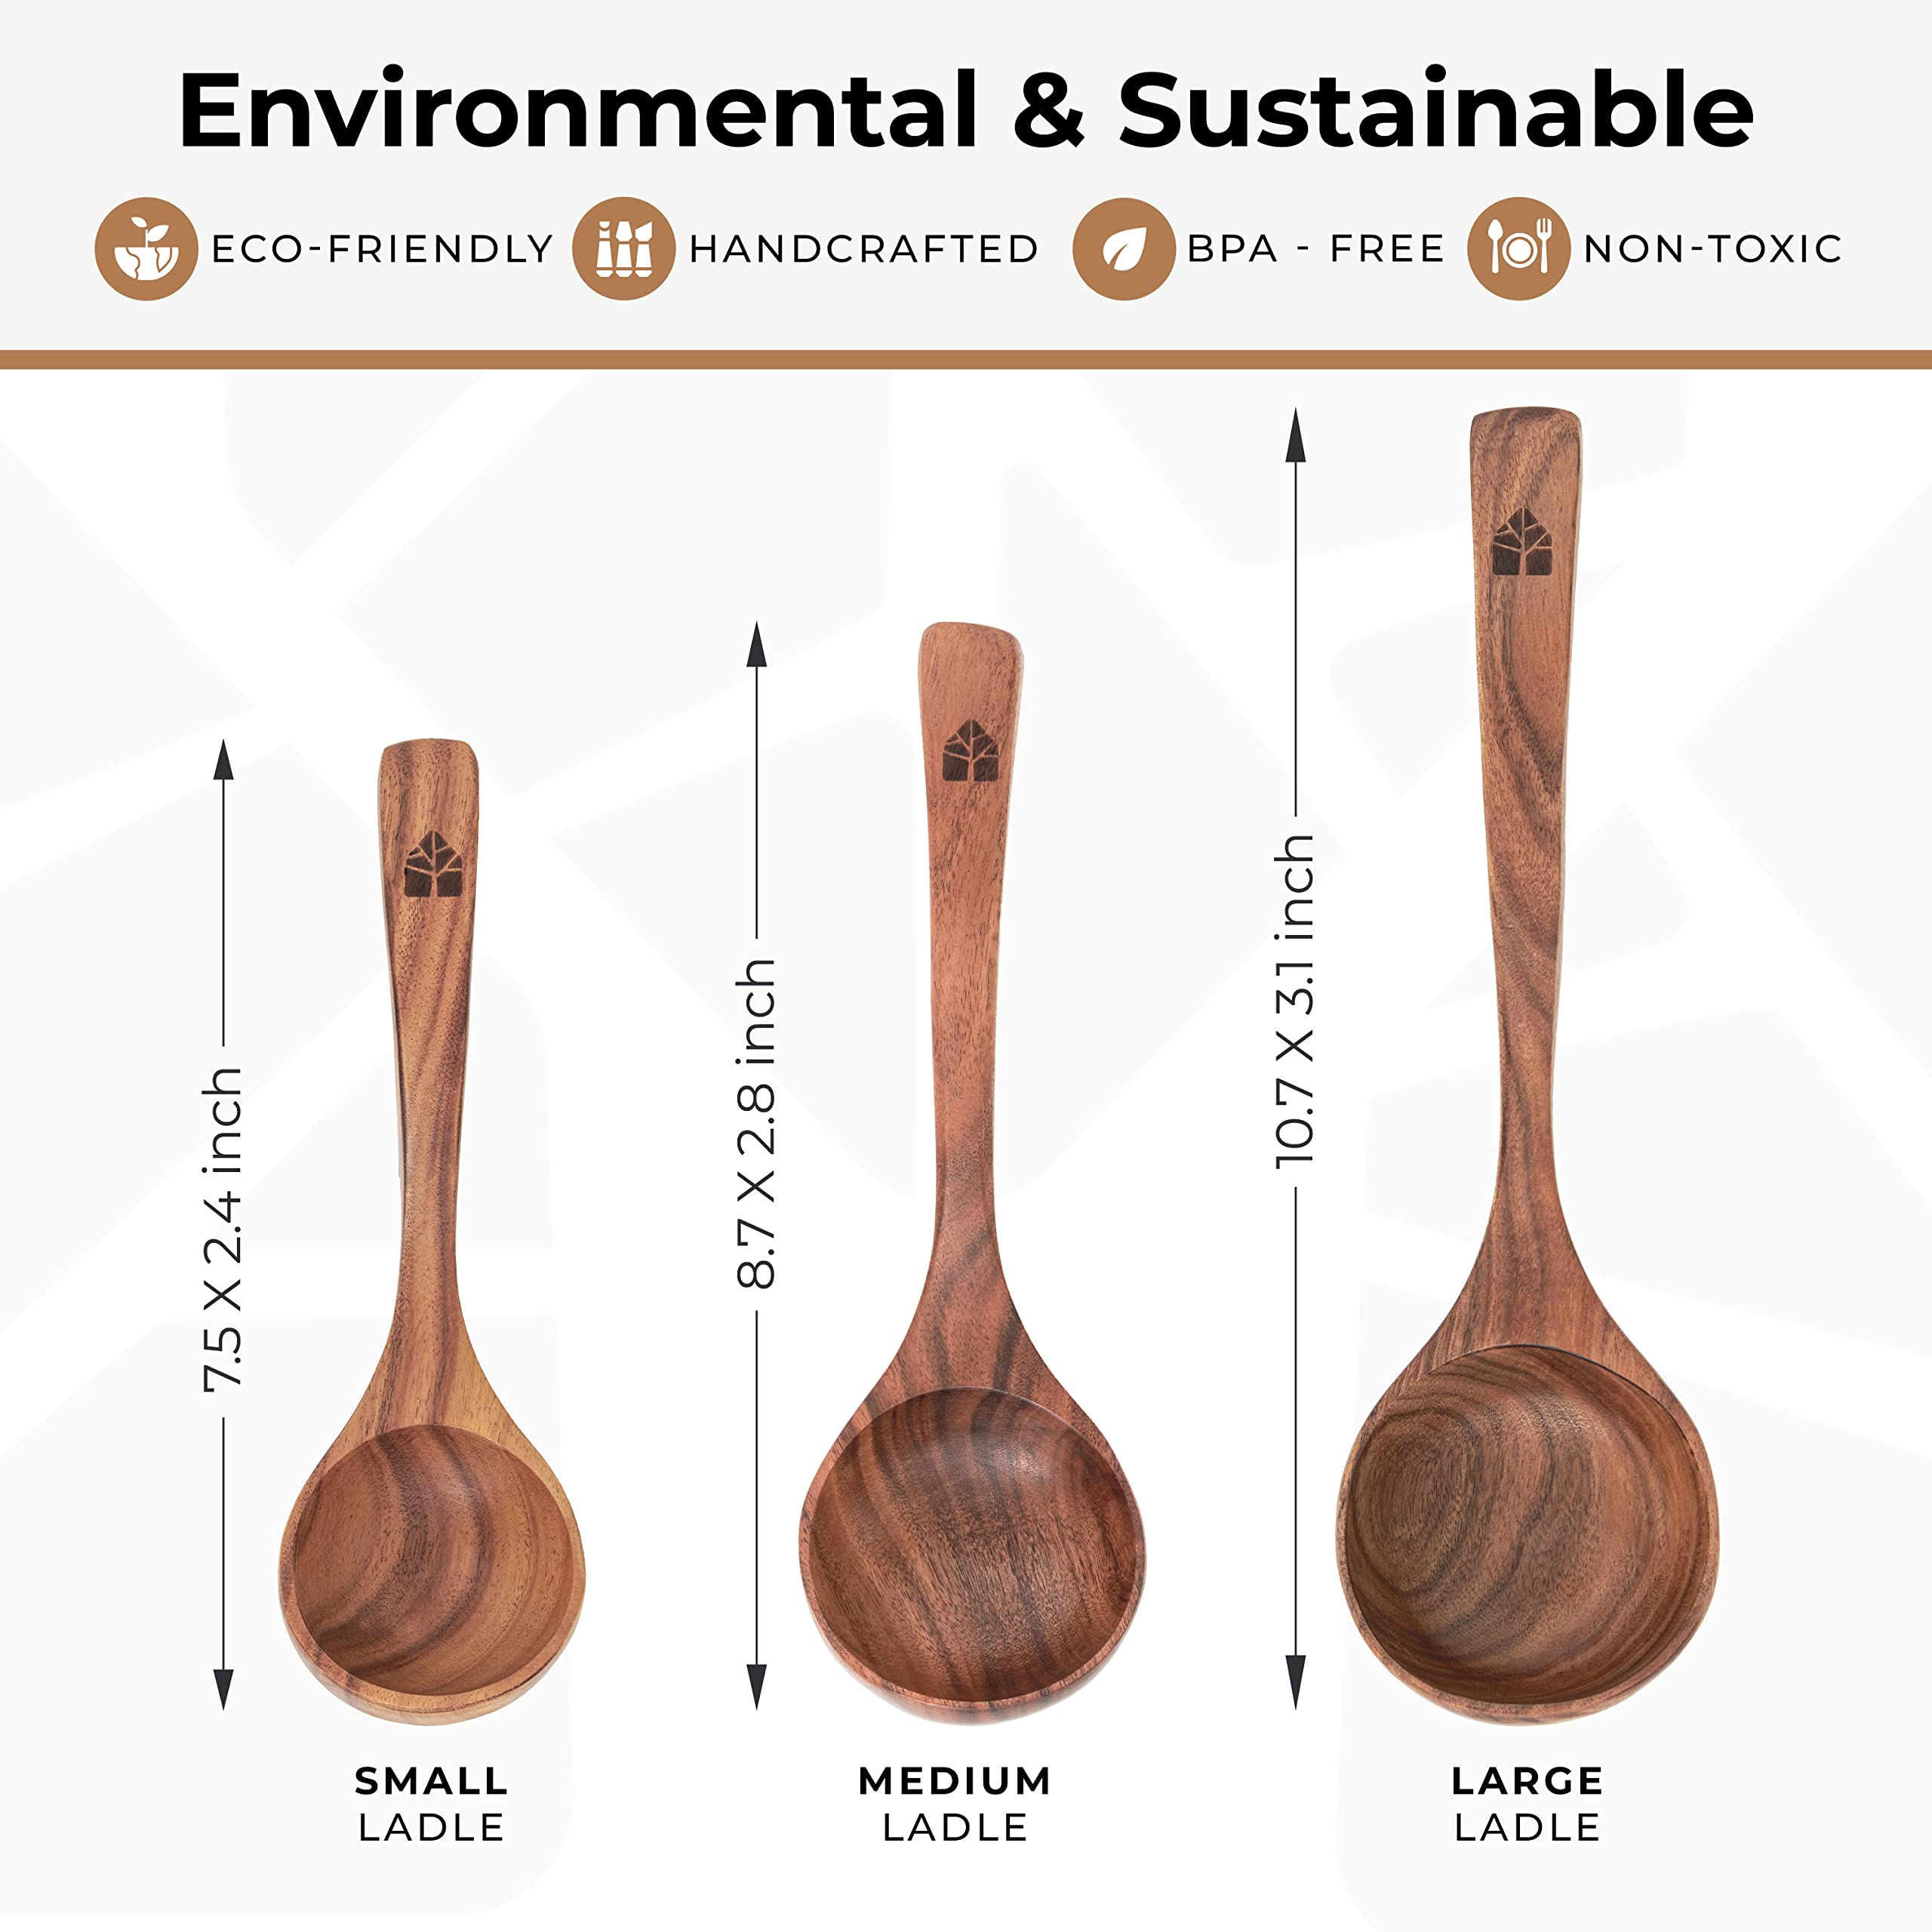 Olive Wood Spoon Salad Set – Woodenhouse Lifelong Quality